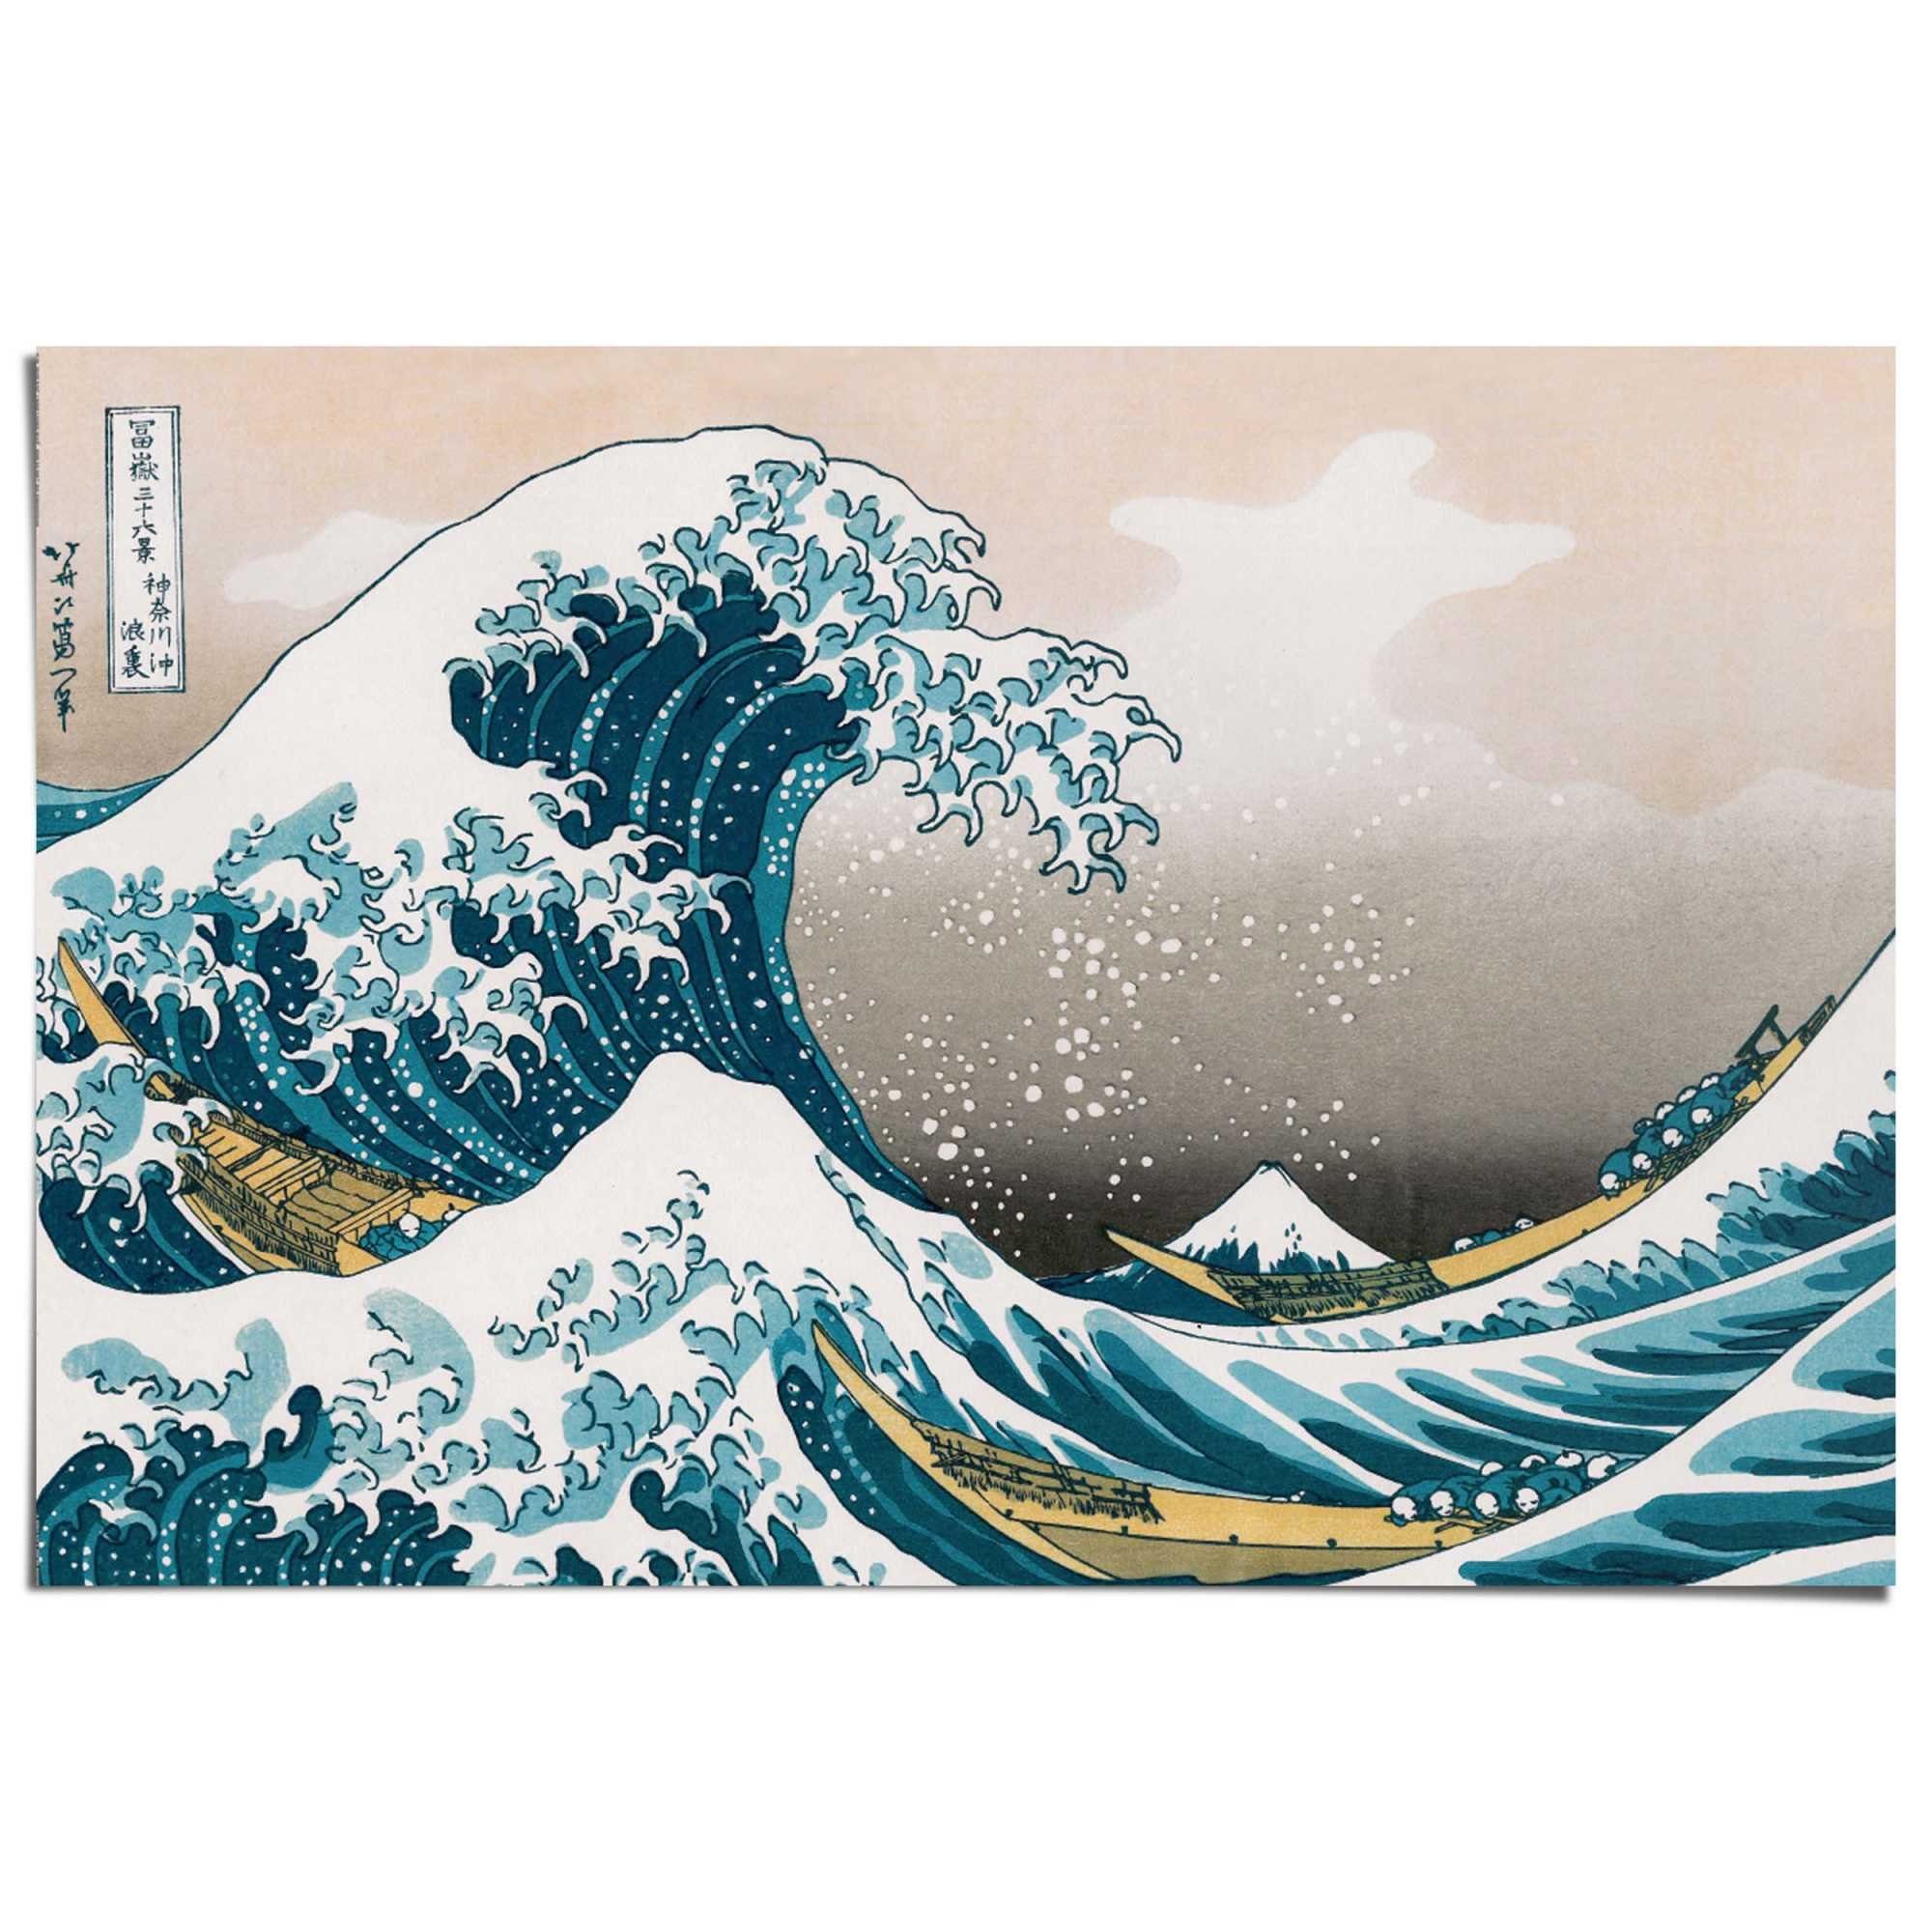 Große Poster Welle - Reinders! Hokusai